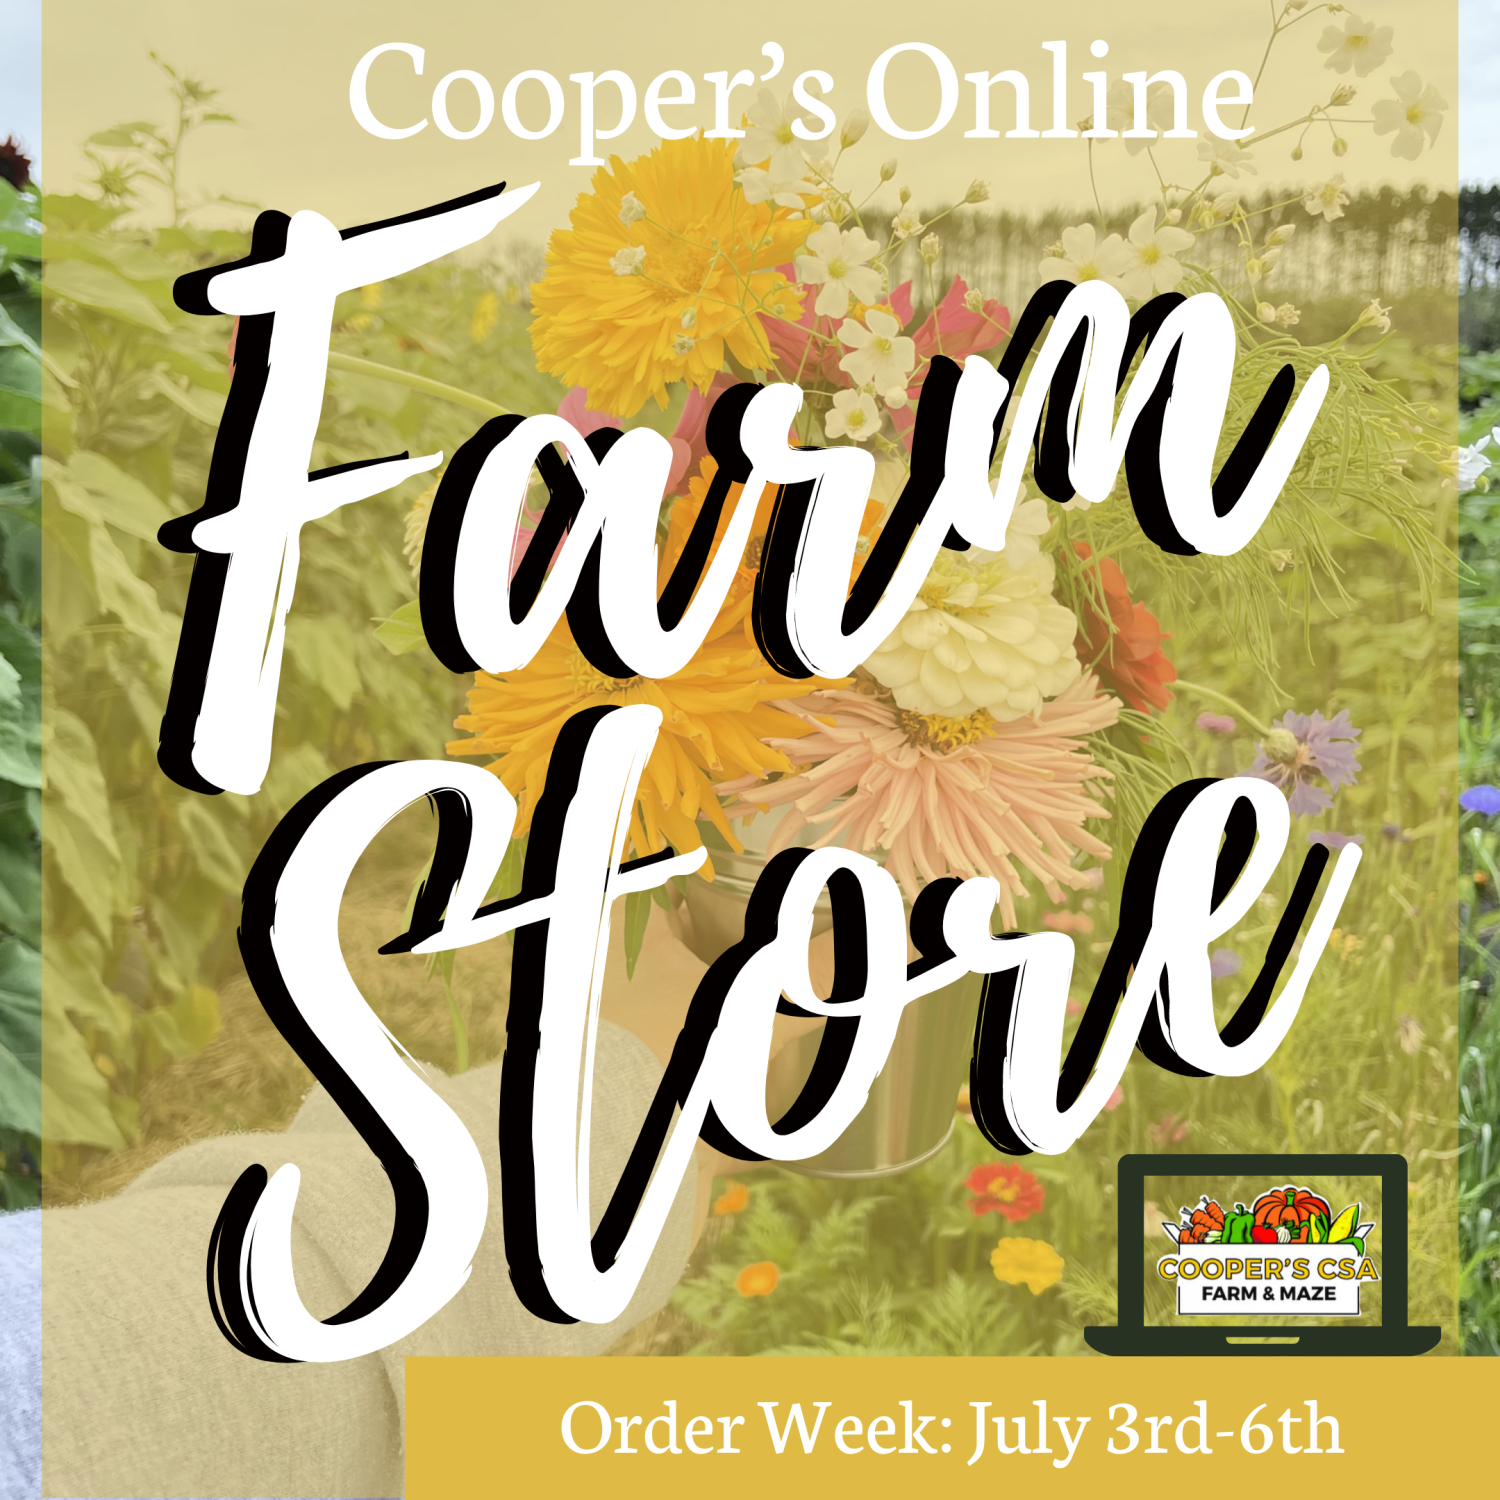 Coopers CSA Online FarmStore- Order week July 3rd-6th